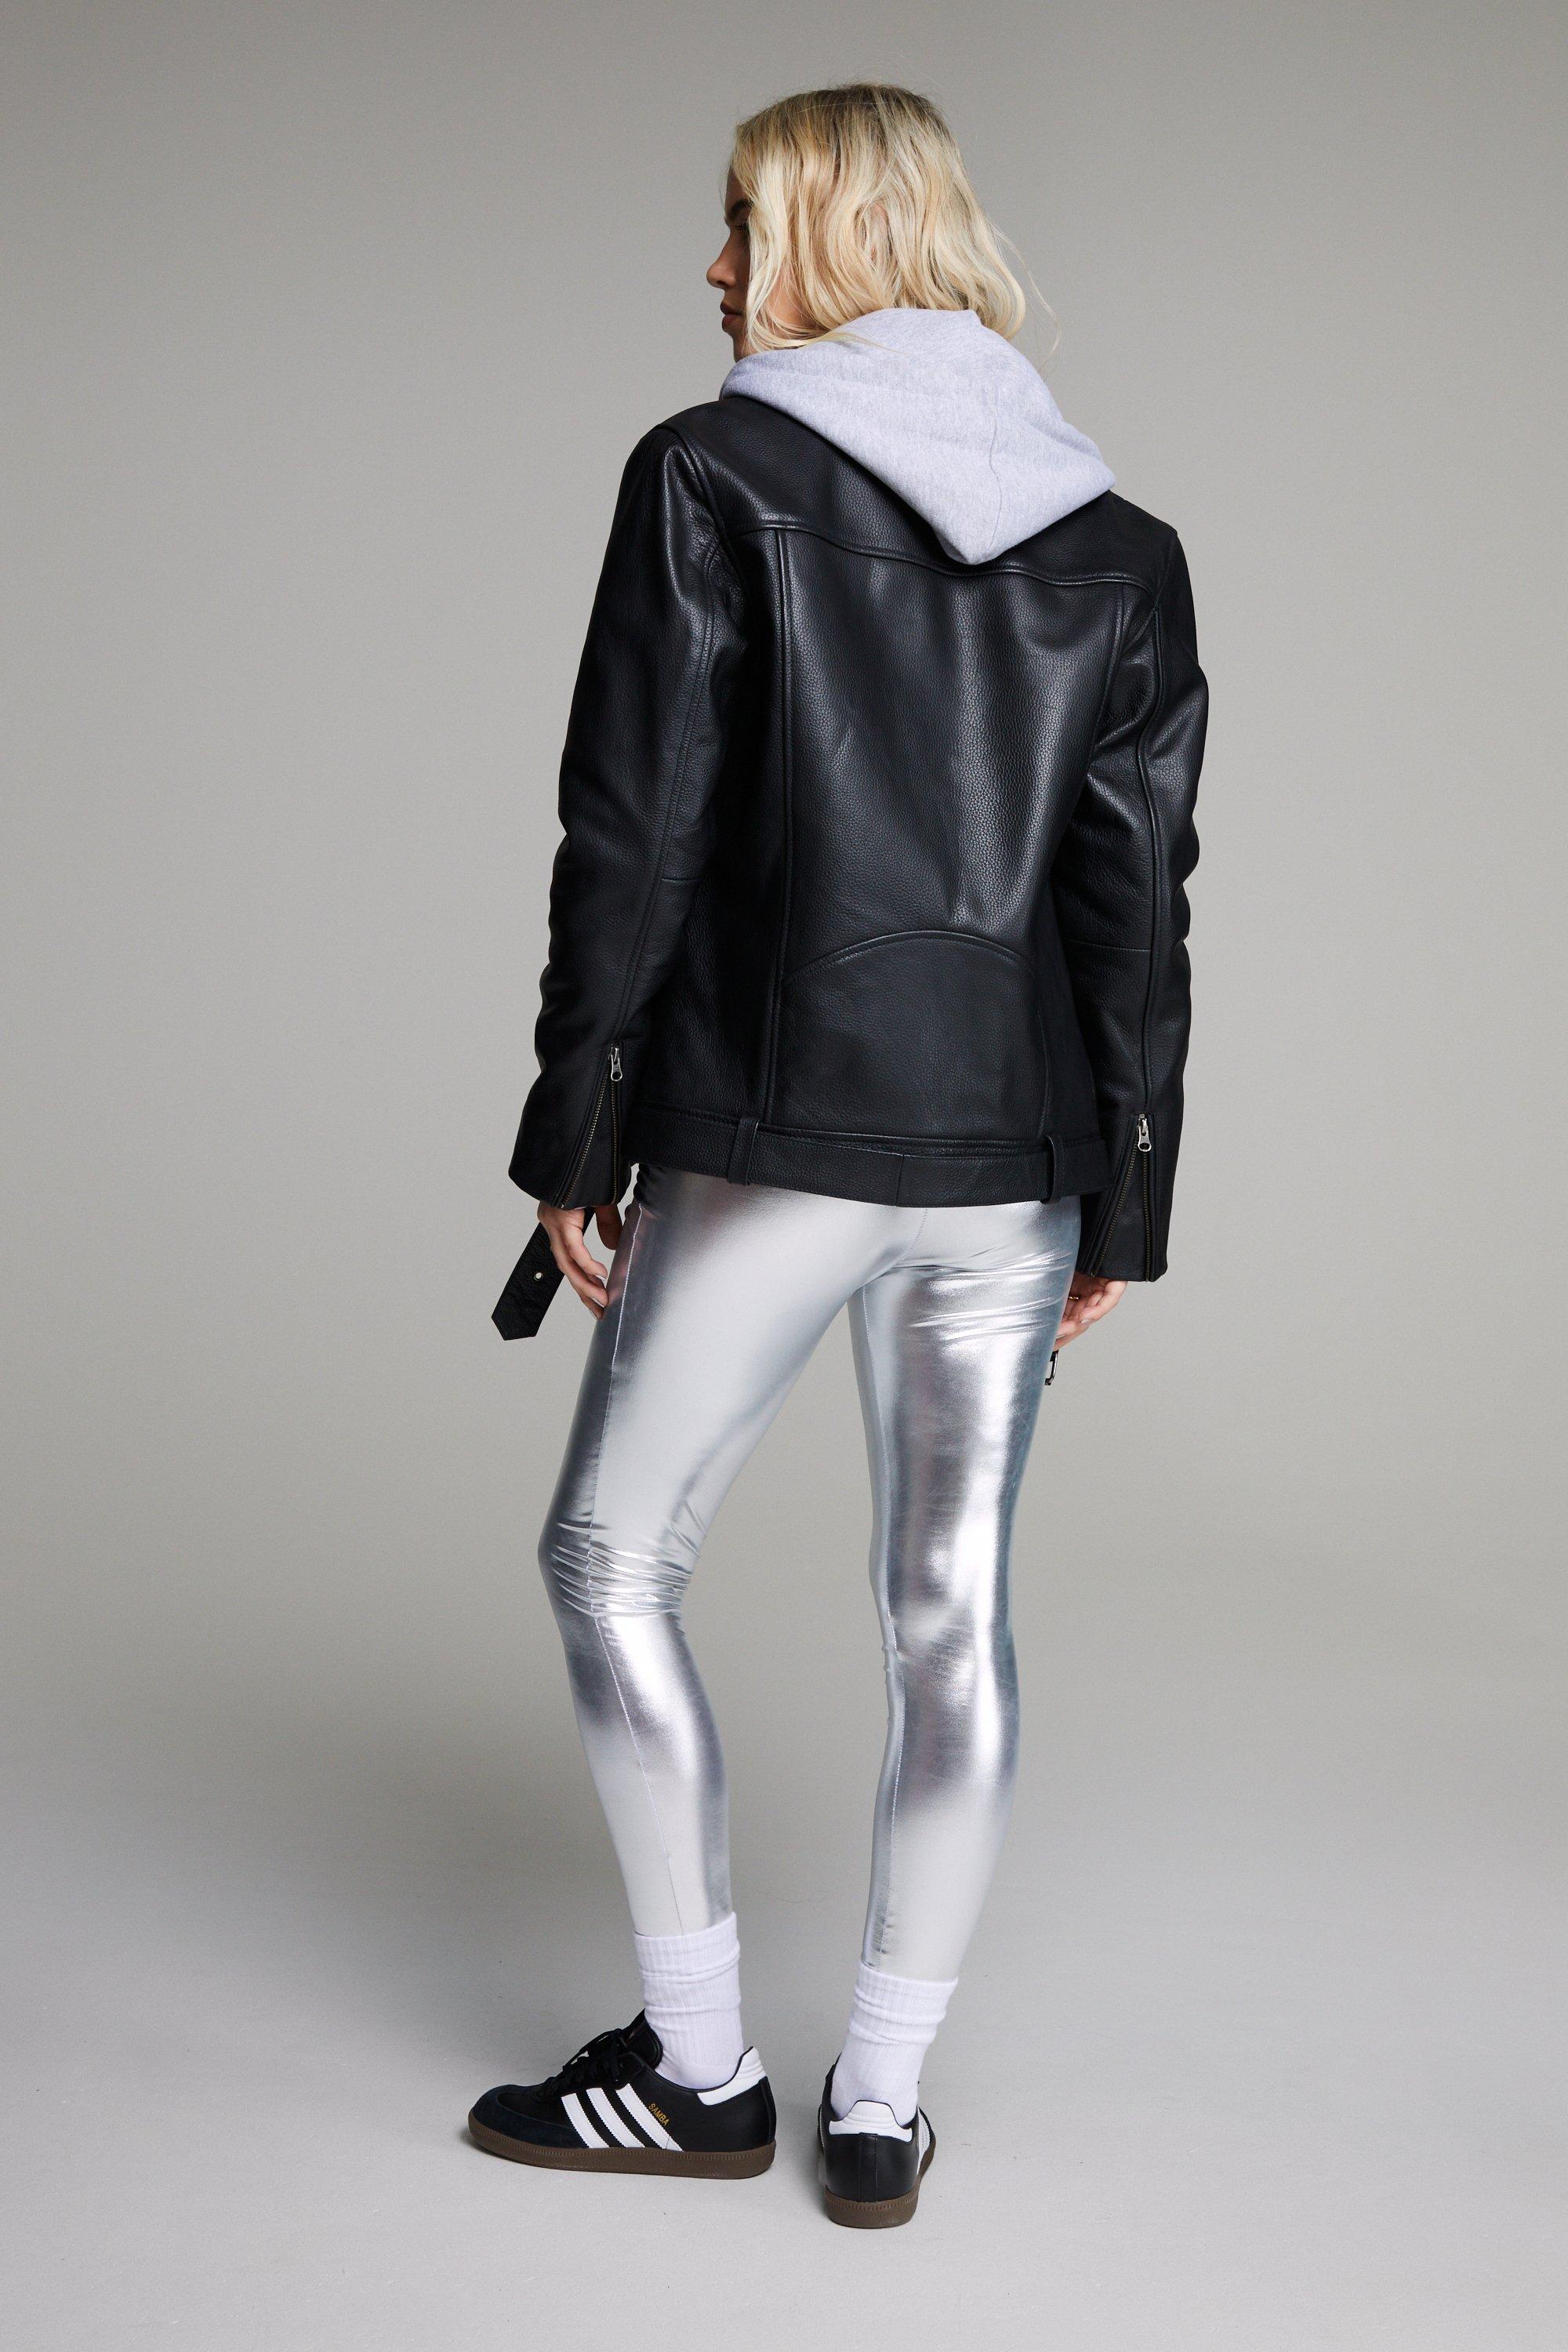 https://media.nastygal.com/i/nastygal/bgg19393_silver_xl_3/silver-metallic-high-waisted-leggings